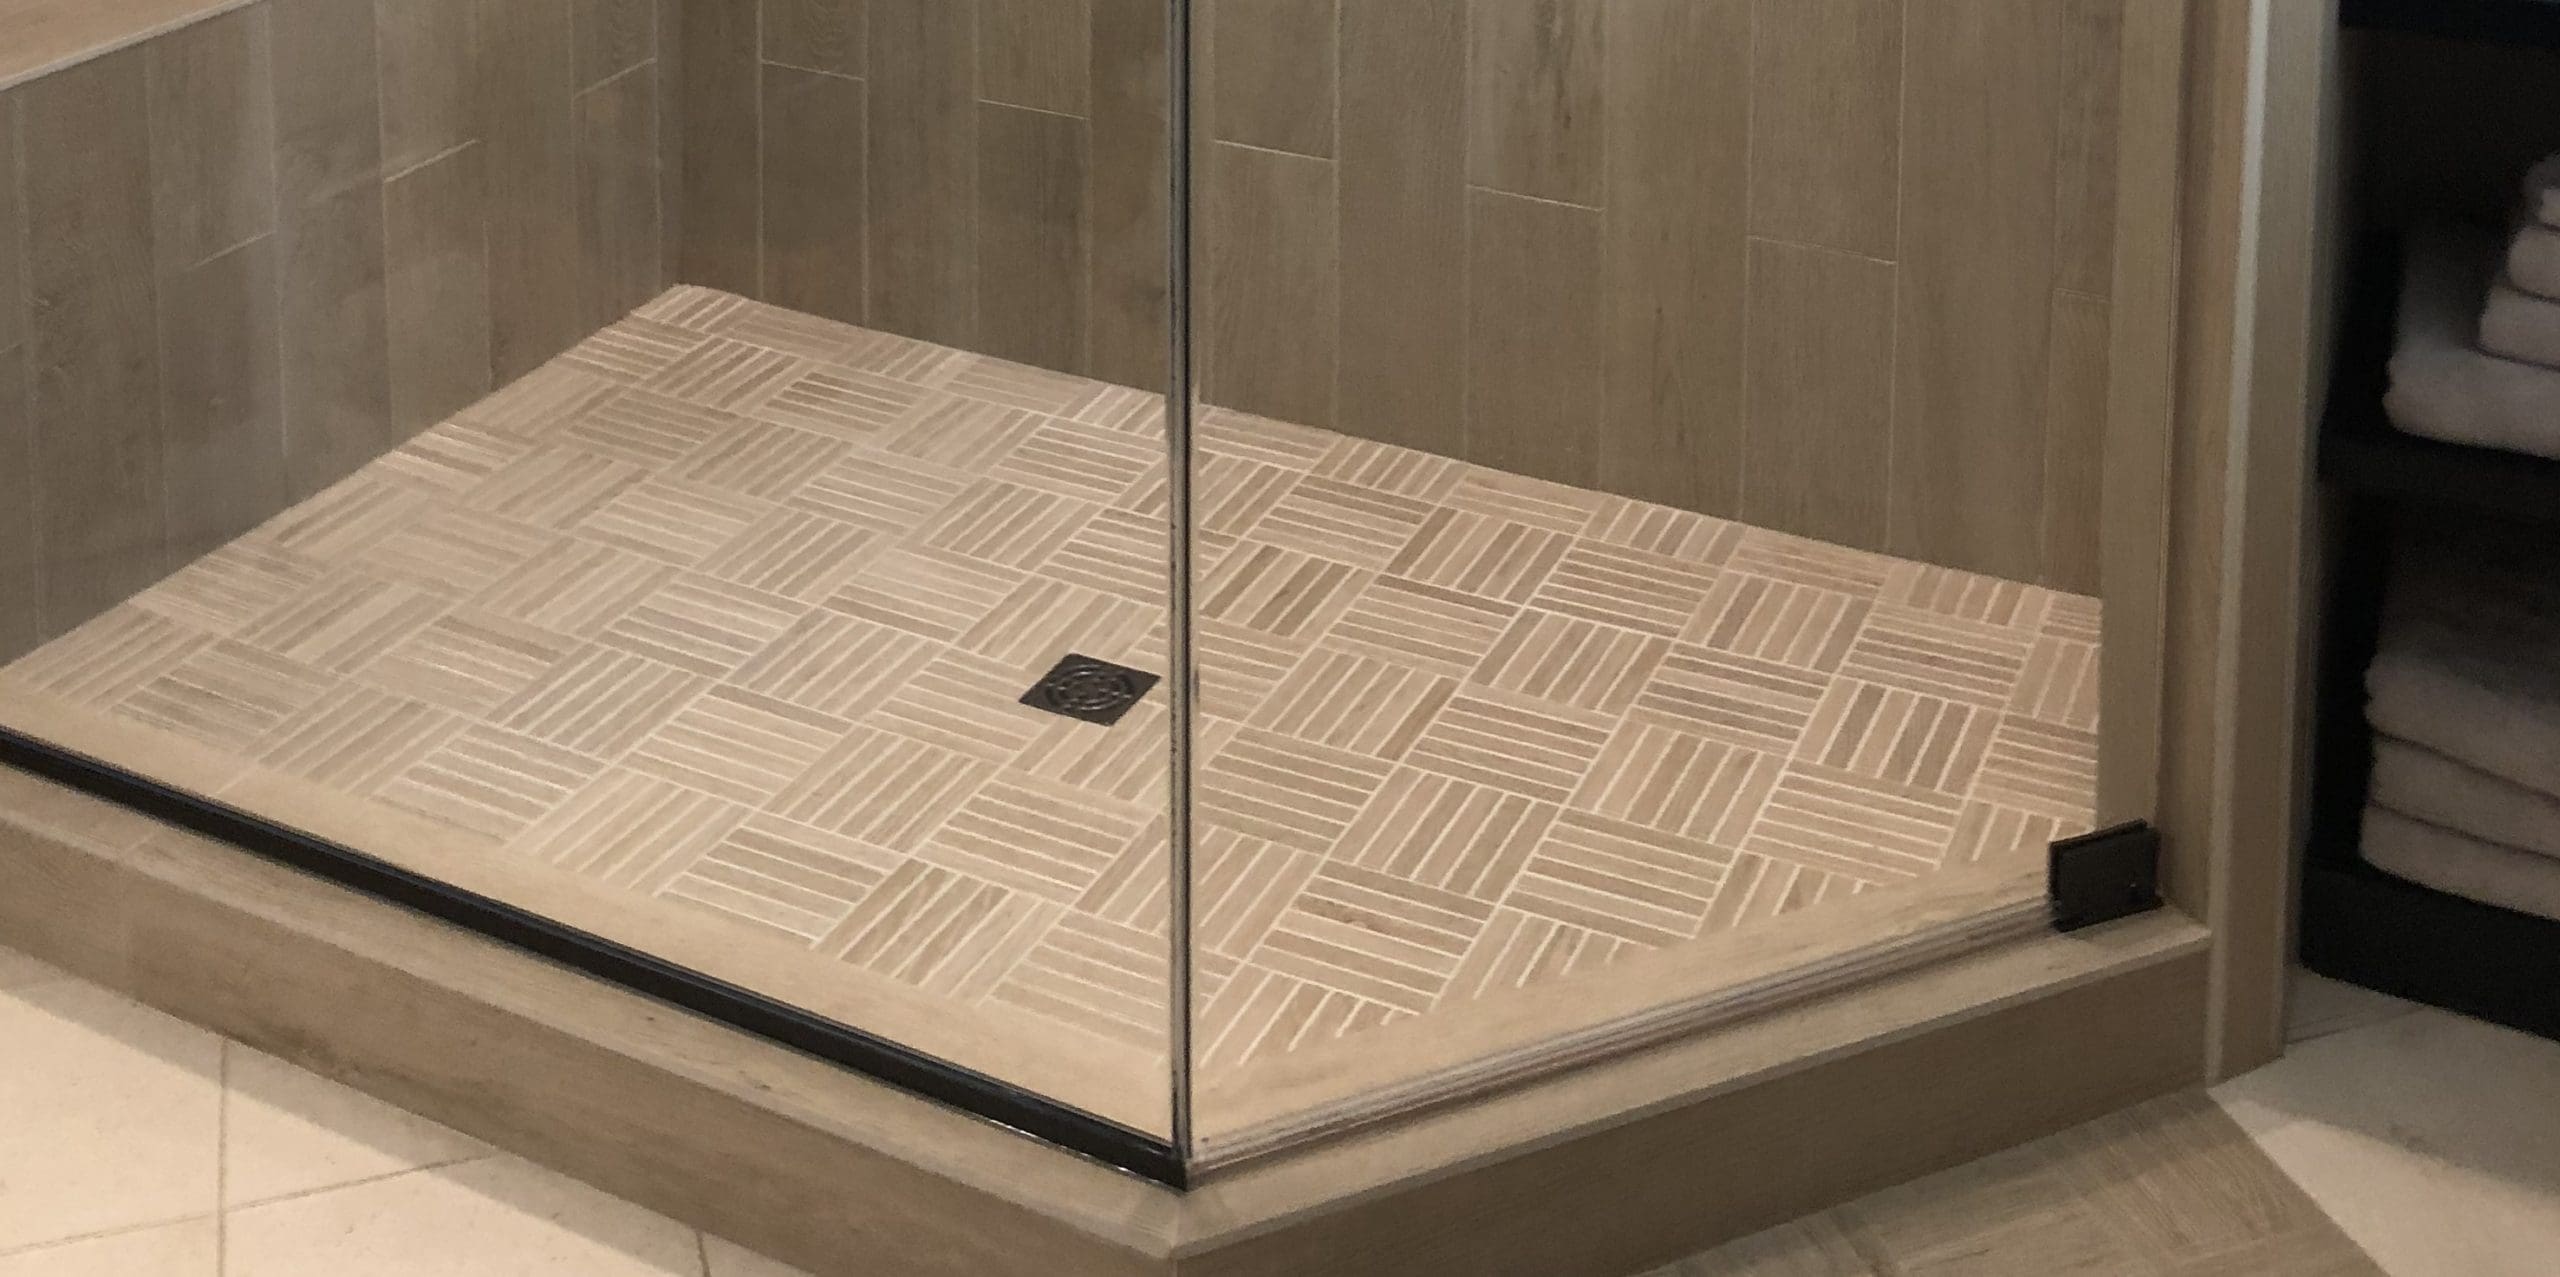 Prefabricated Unit Or A Tiled Shower, How To Set Tile On Shower Floor